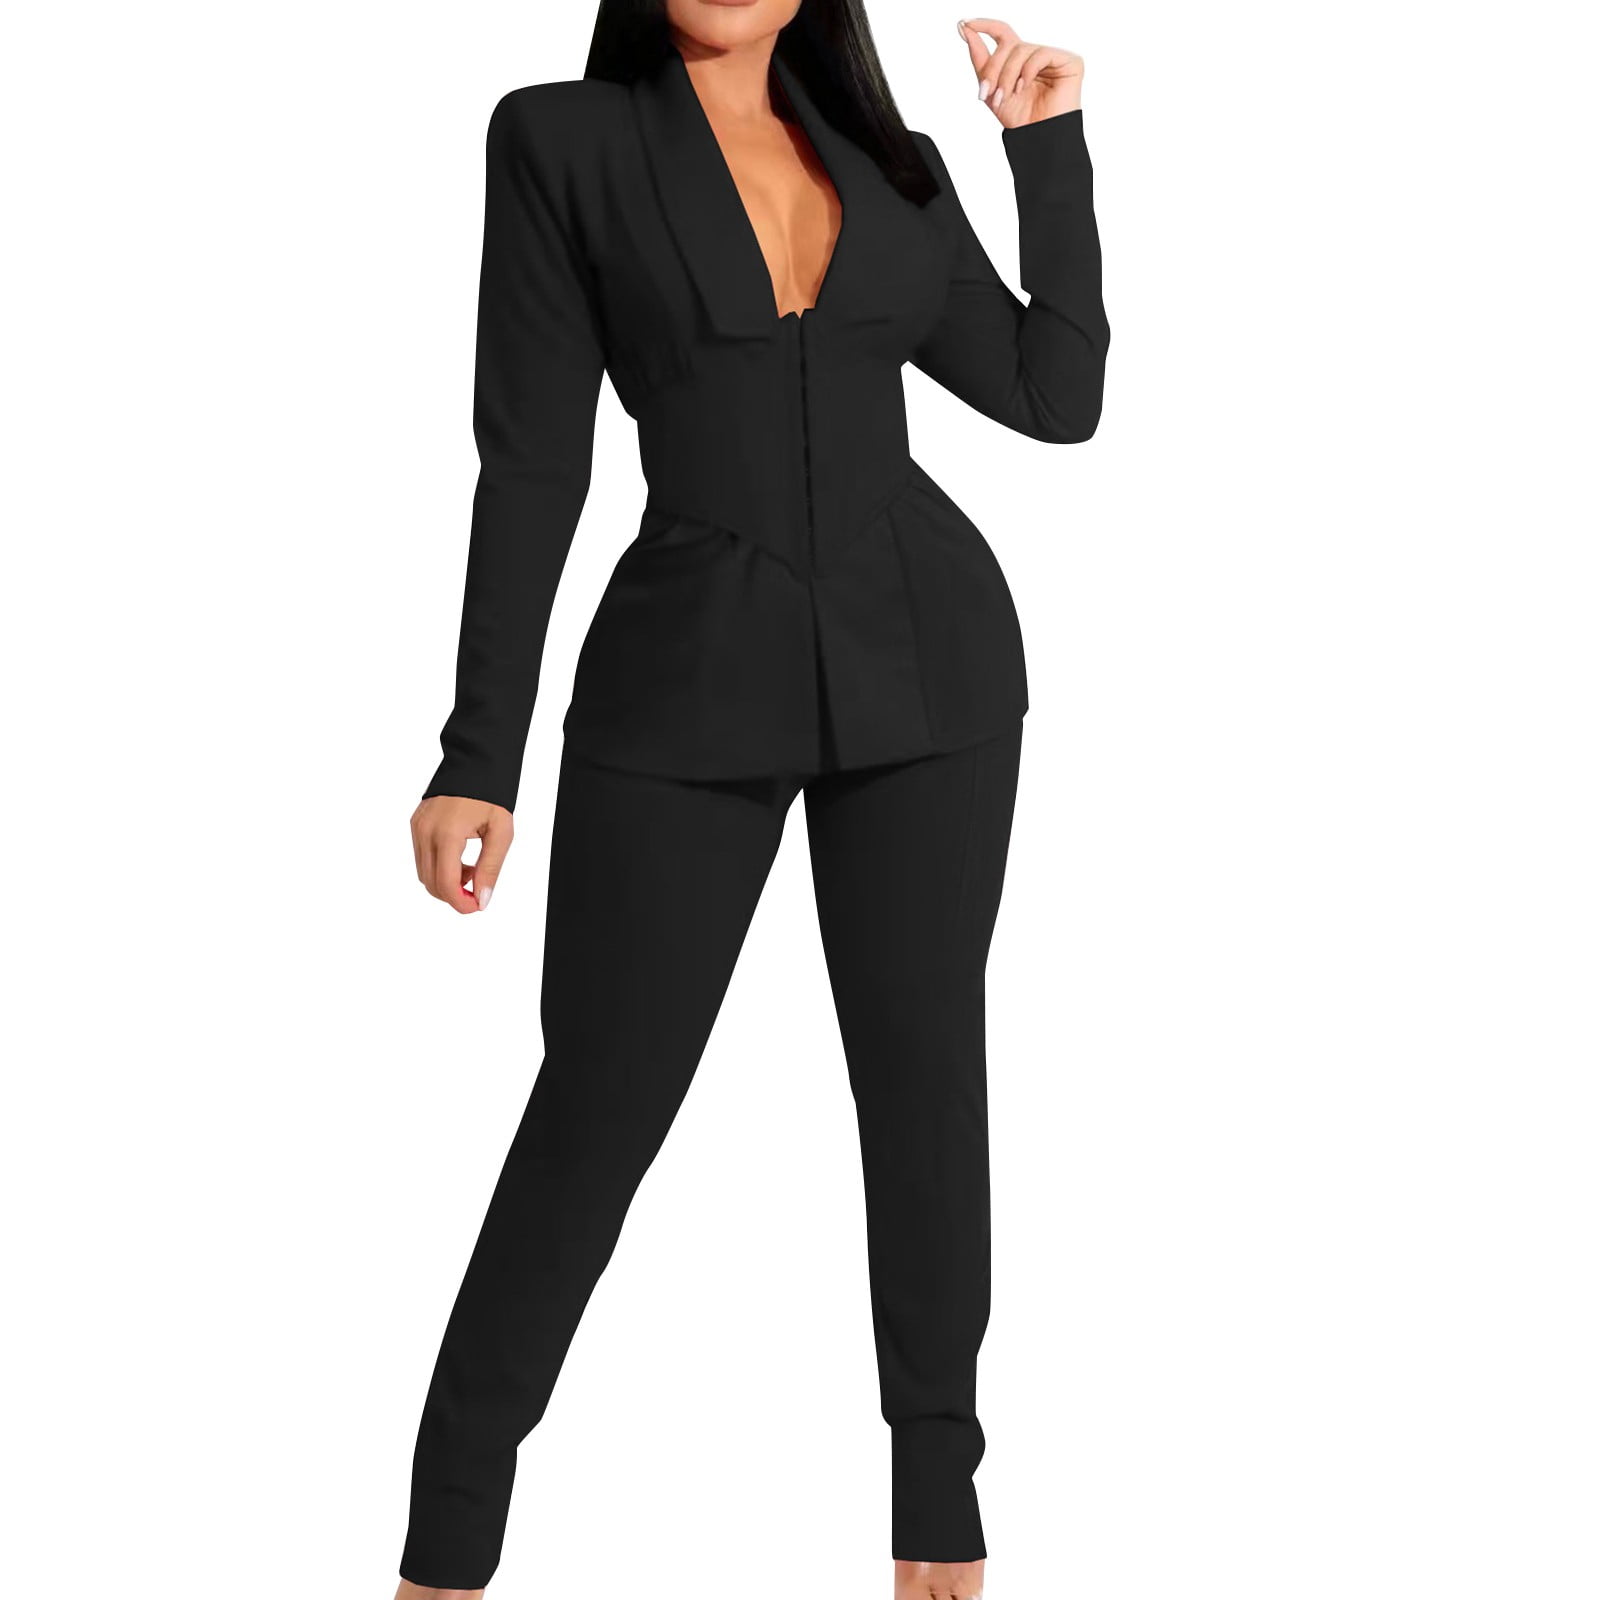 JDEFEG Business Suit Girls Women 2 Piece Outfits Suits Set Long Sleeve  Button Blazer High Waisted Pants Jumpsuit for Business Work Suit Set